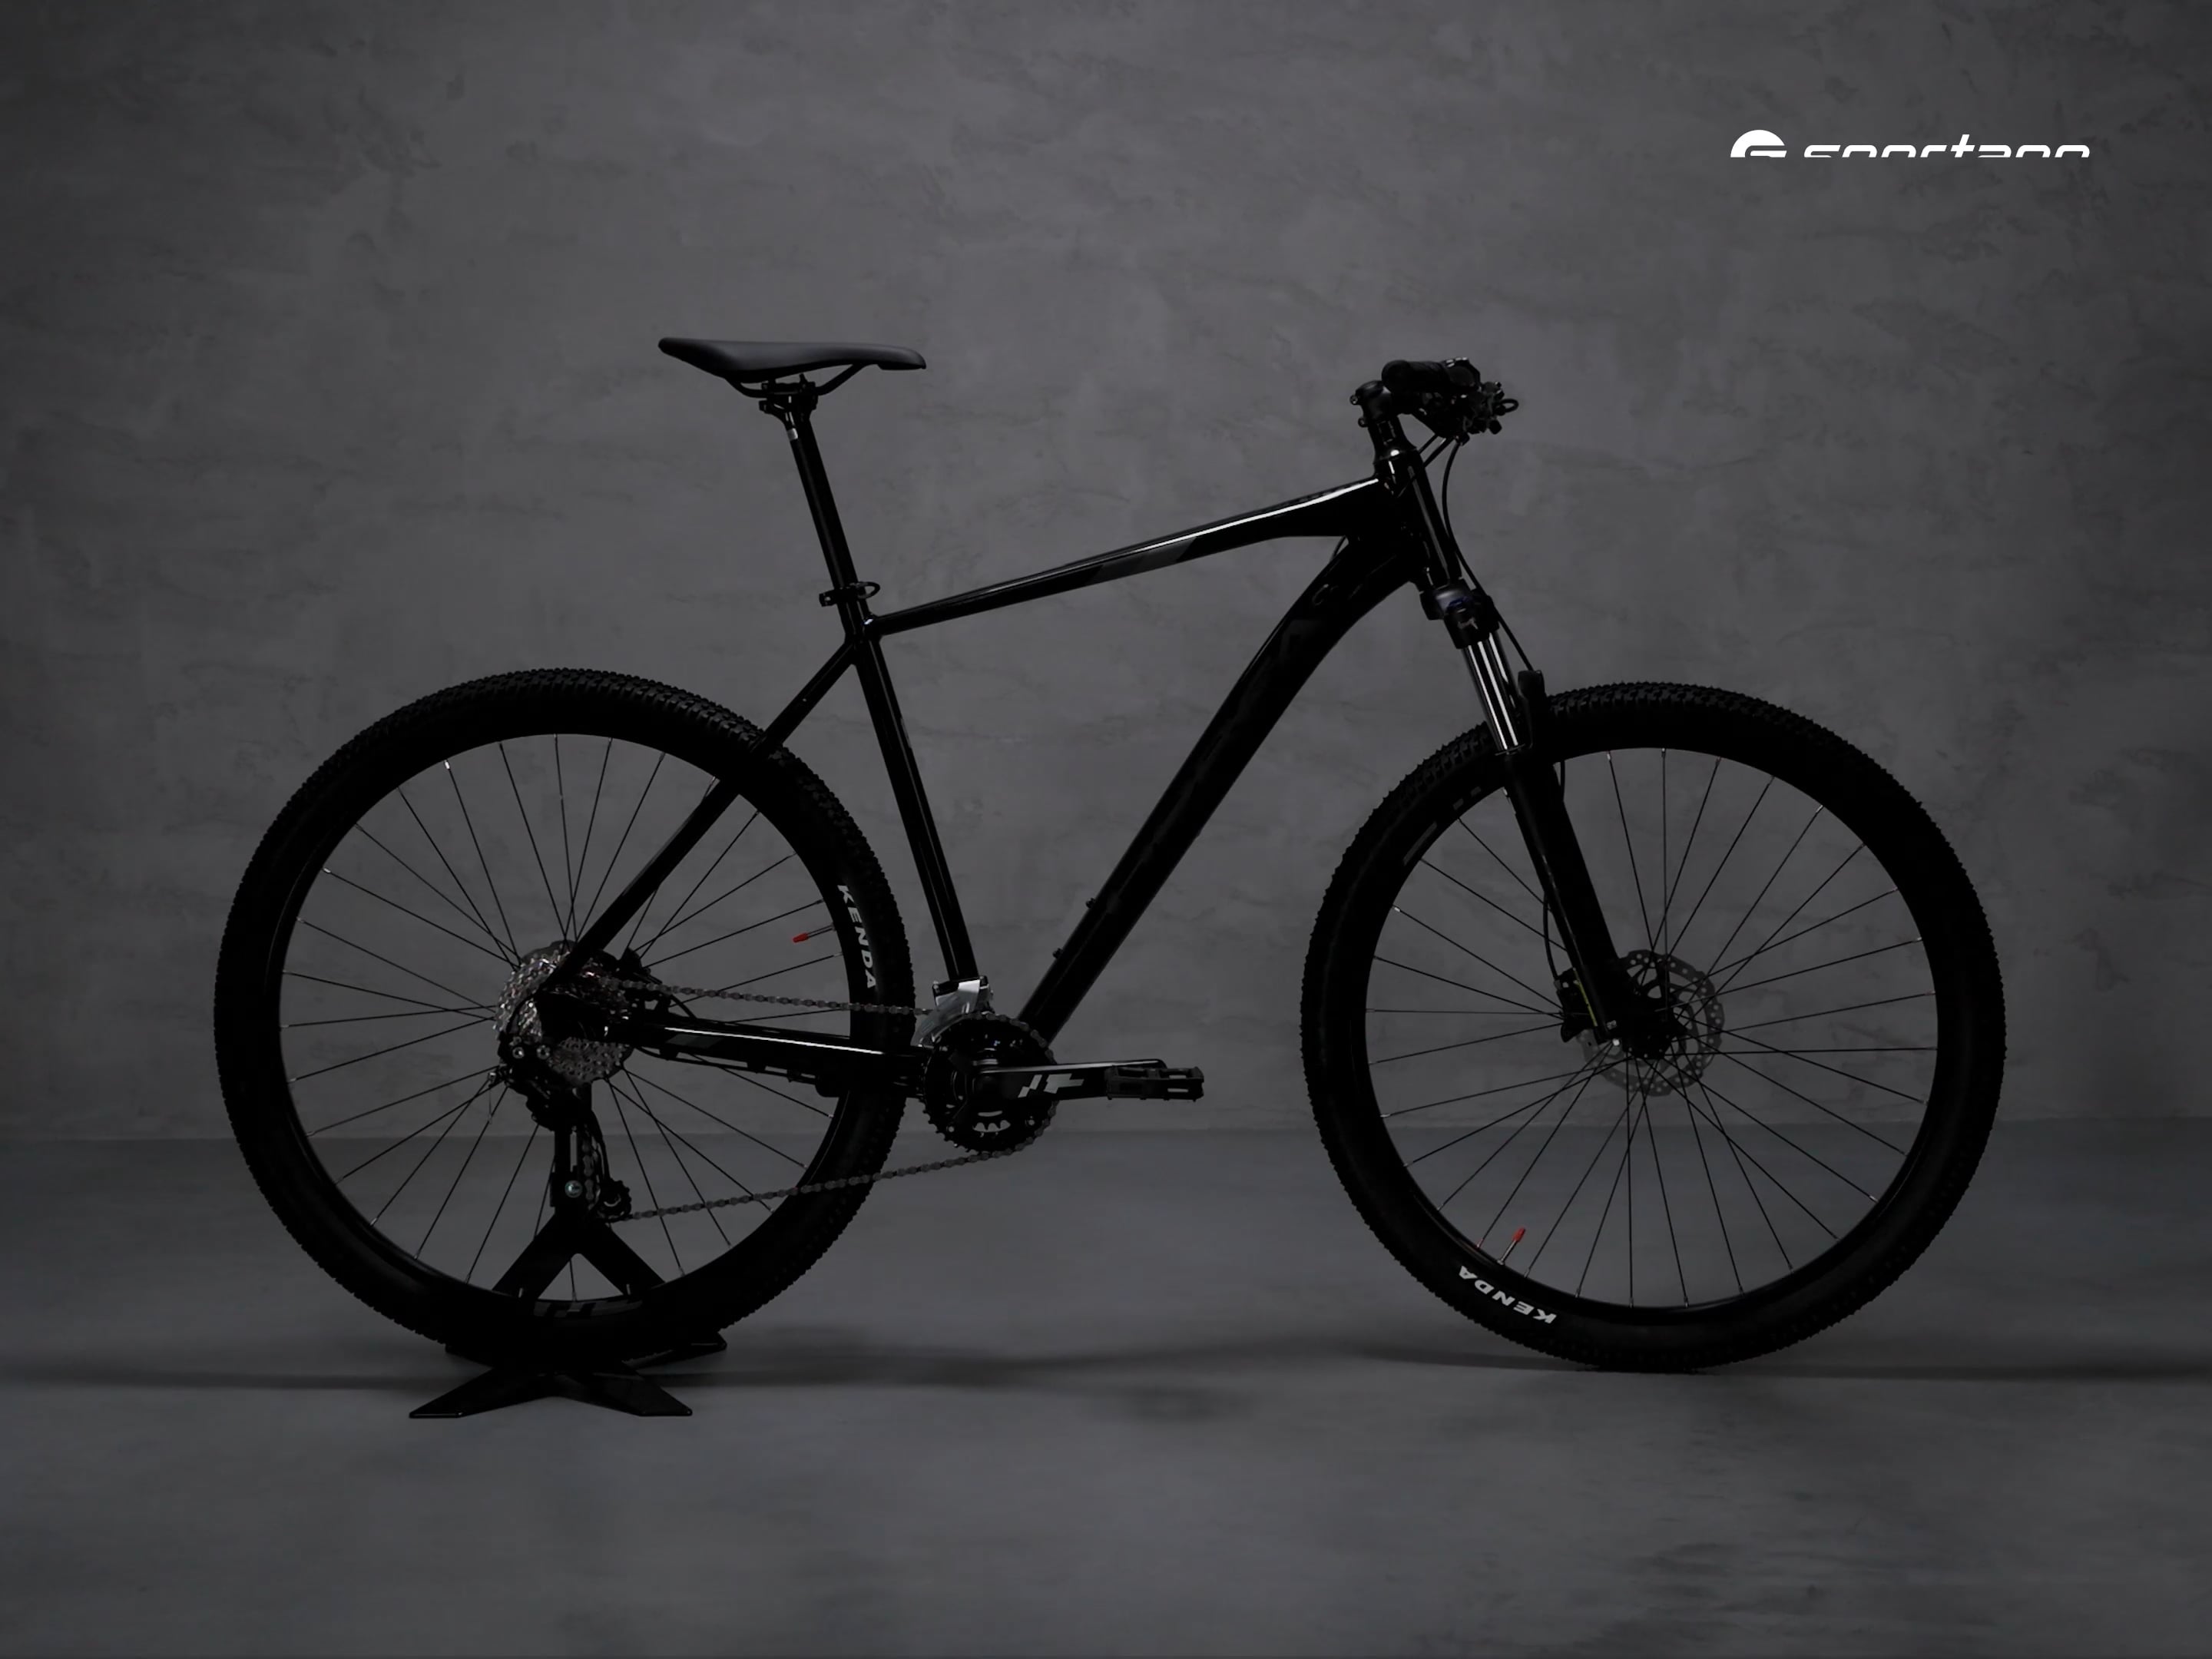 Horský bicykel Orbea MX 27 50 čierny